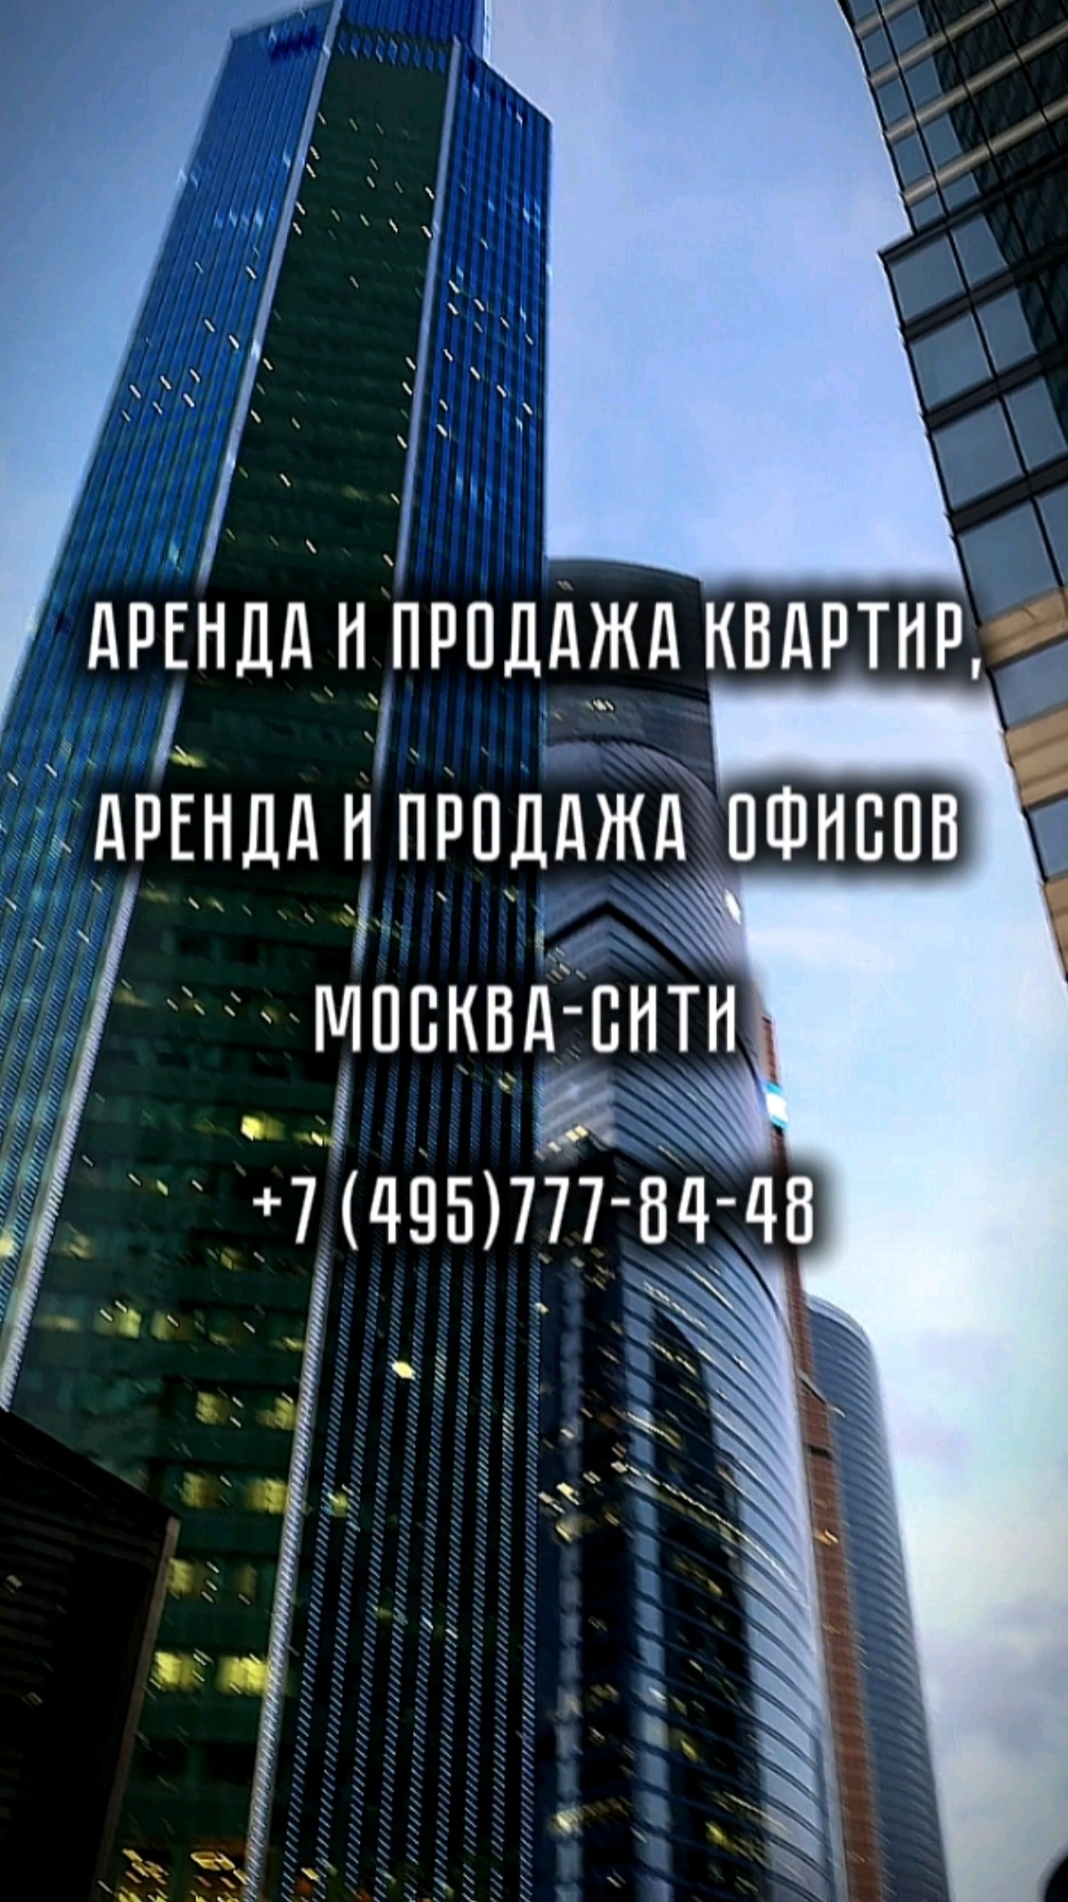 Квартиры и офисы в Москва-Сити 
https://moscow-city.online/contact/